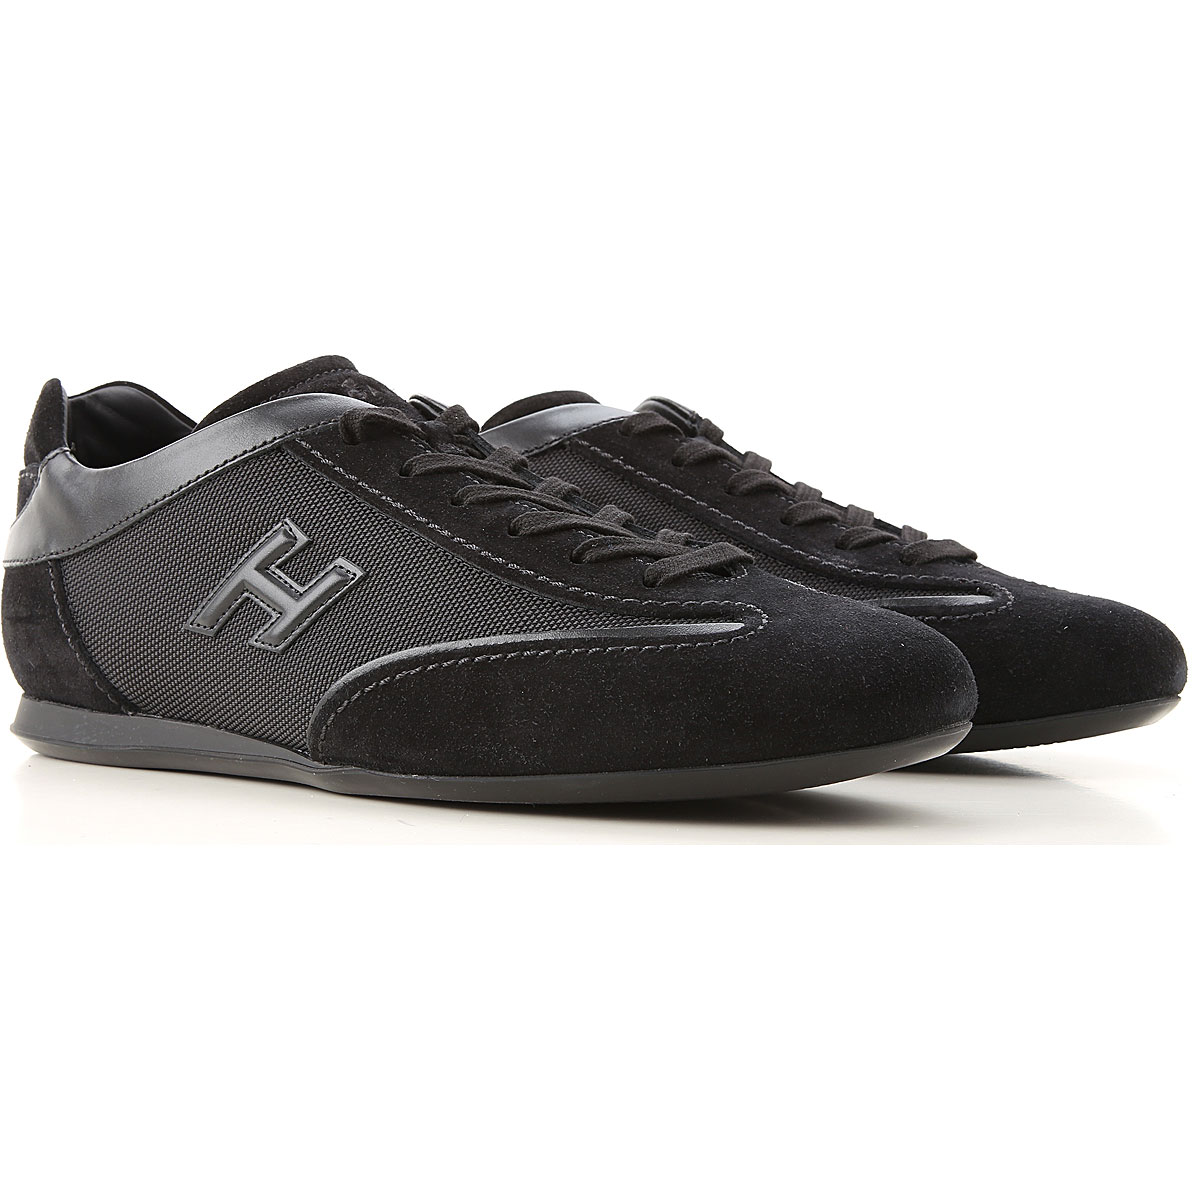 Mens Shoes Hogan, Style code: hxm0570i972jgfb999--